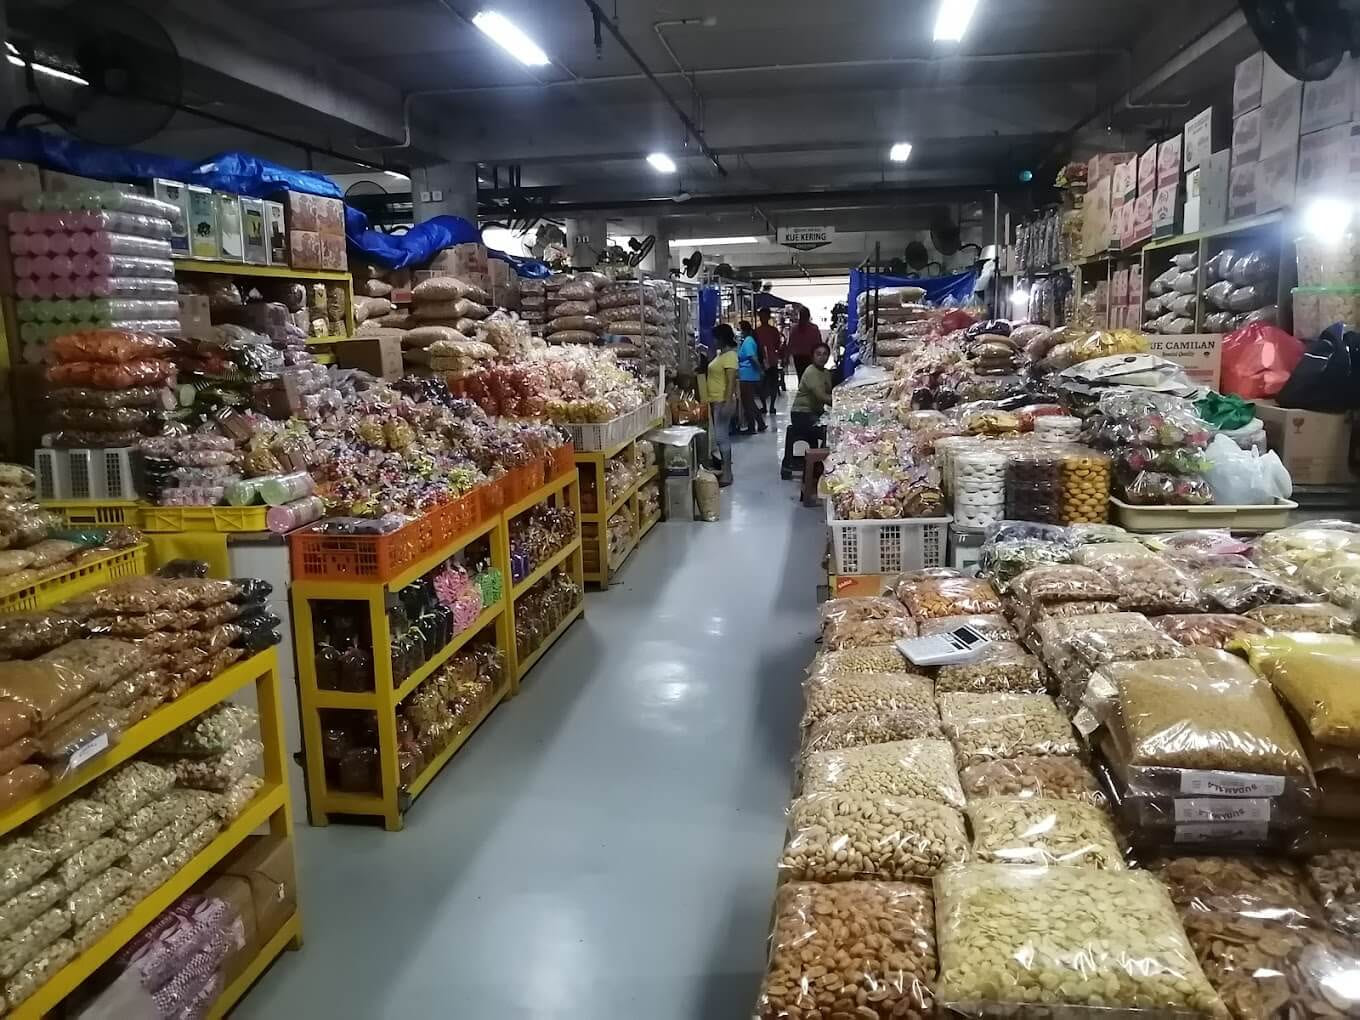 Pasar Badung Market filled with local vendors and goods